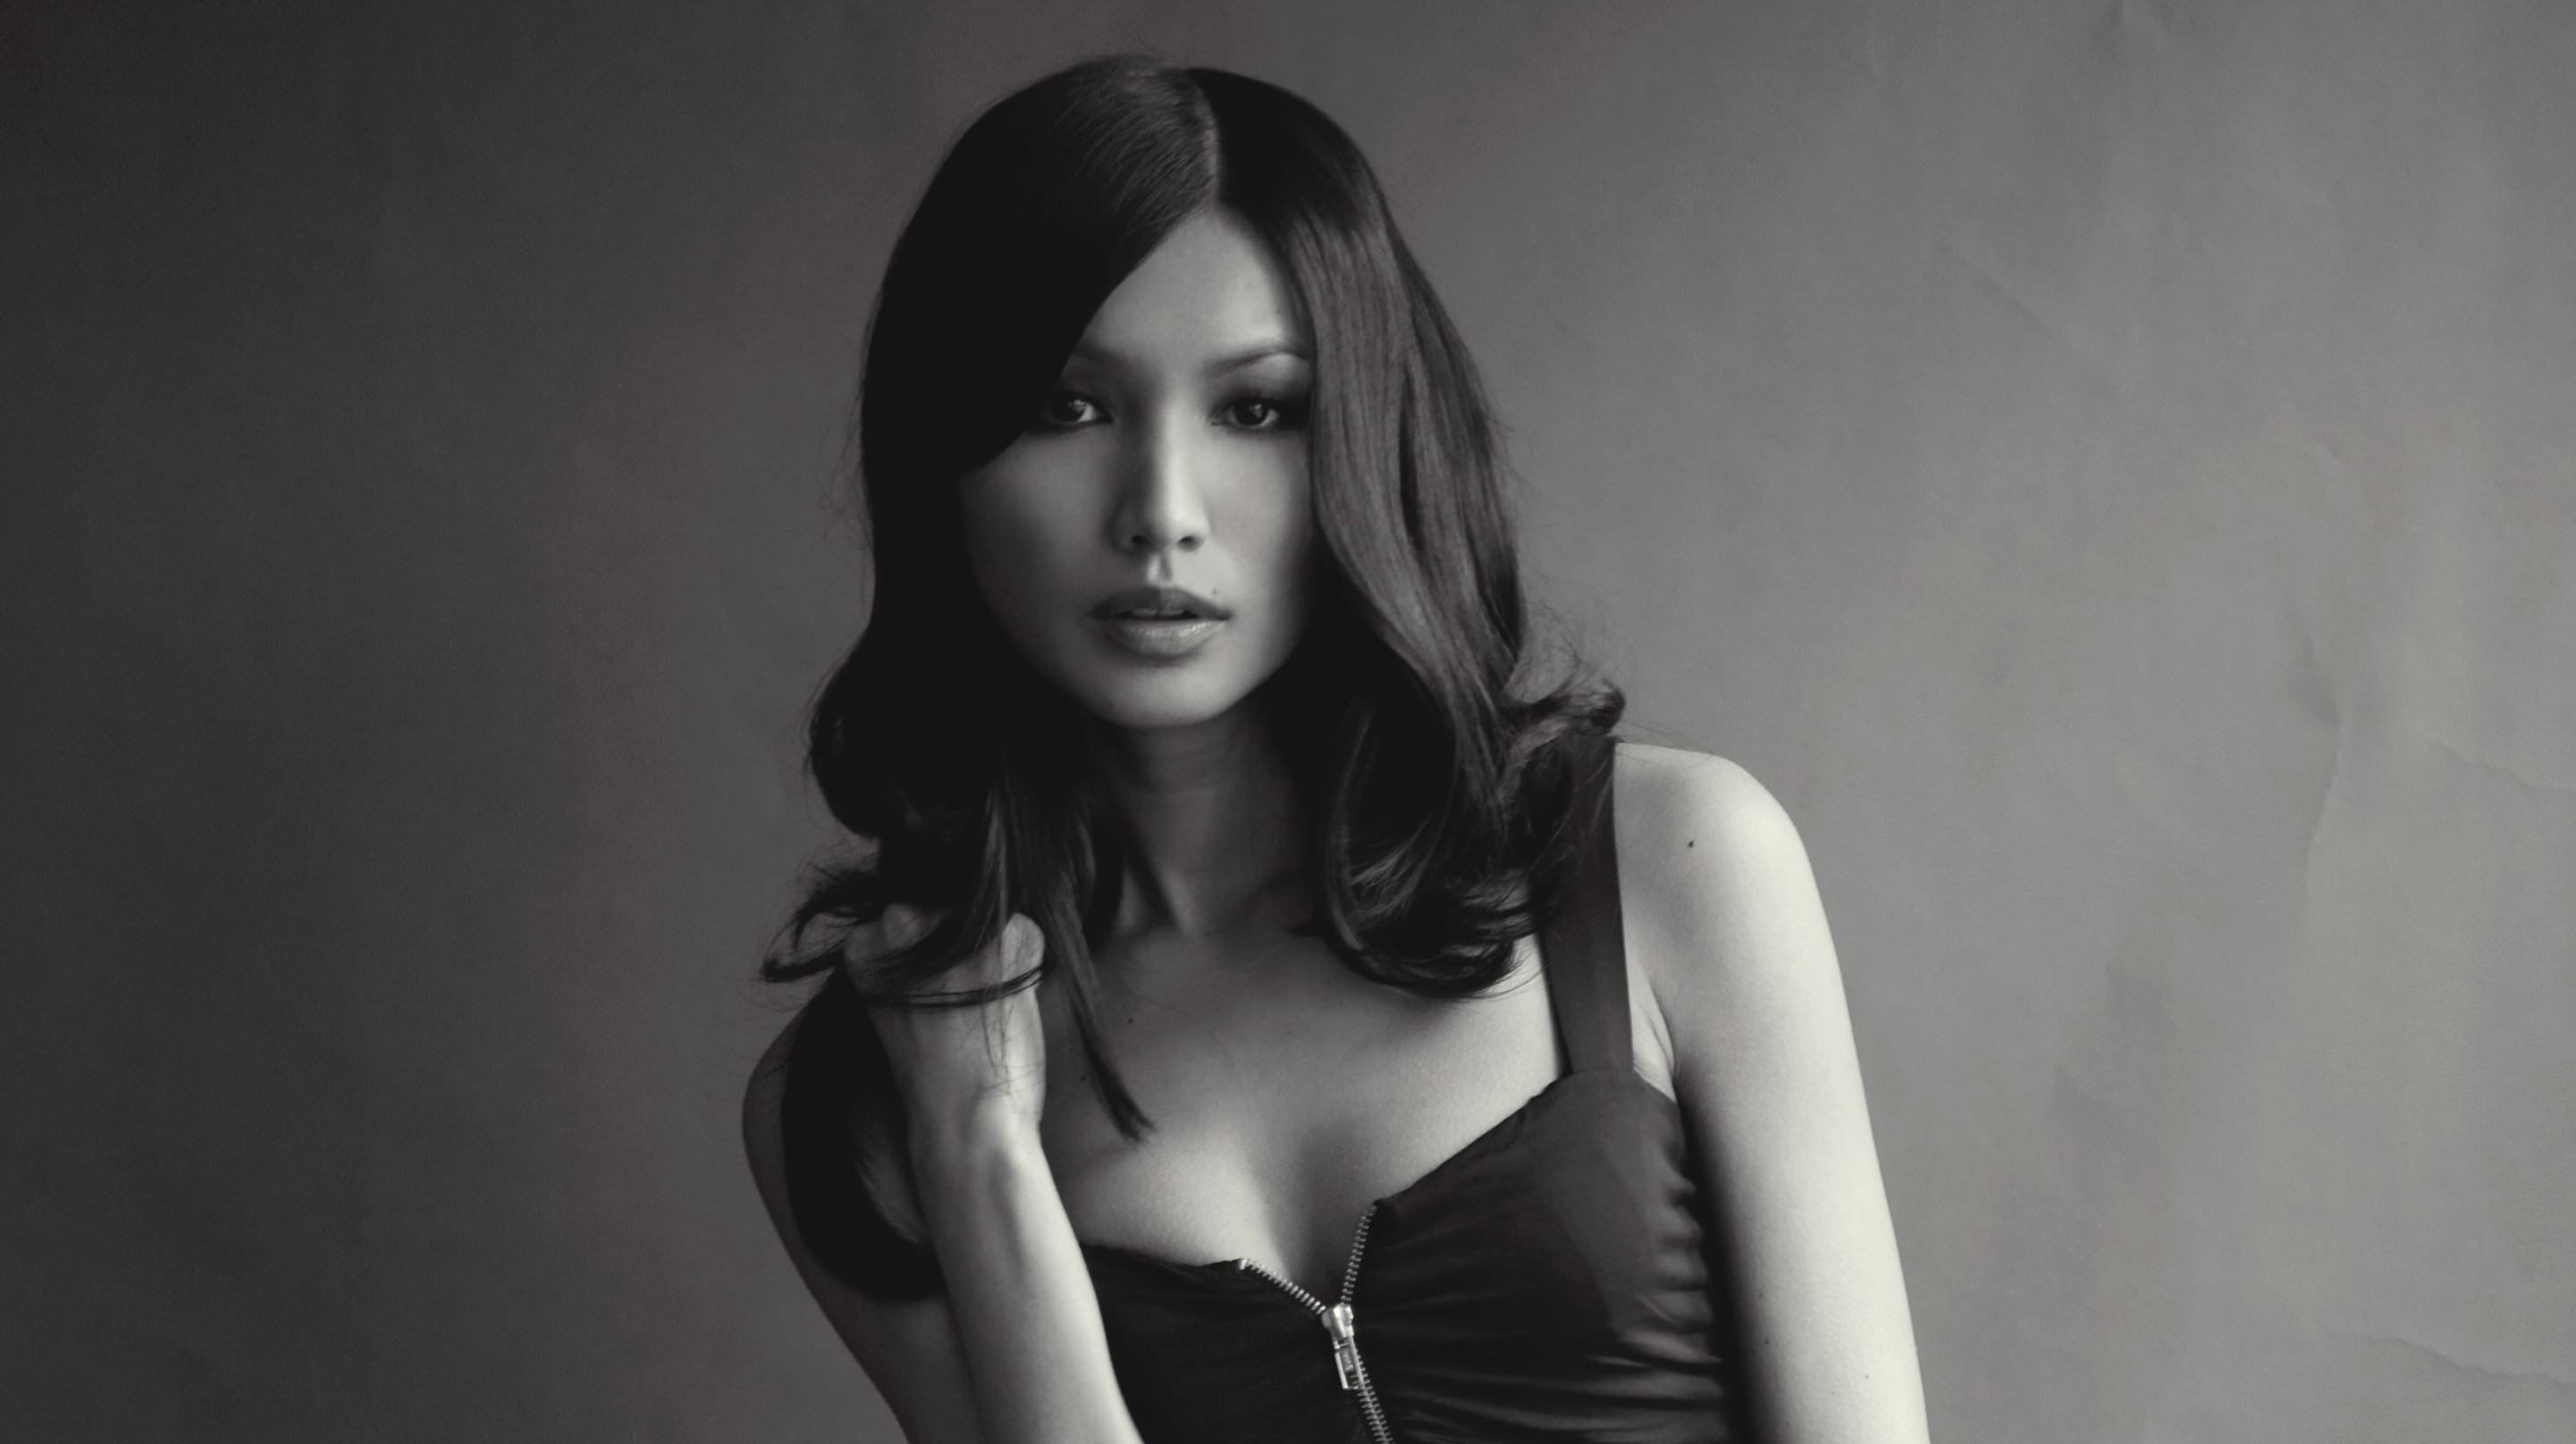 Gemma Chan Humans Actress Wallpaper, HD Celebrities 4K Wallpaper, Image, Photo and Background